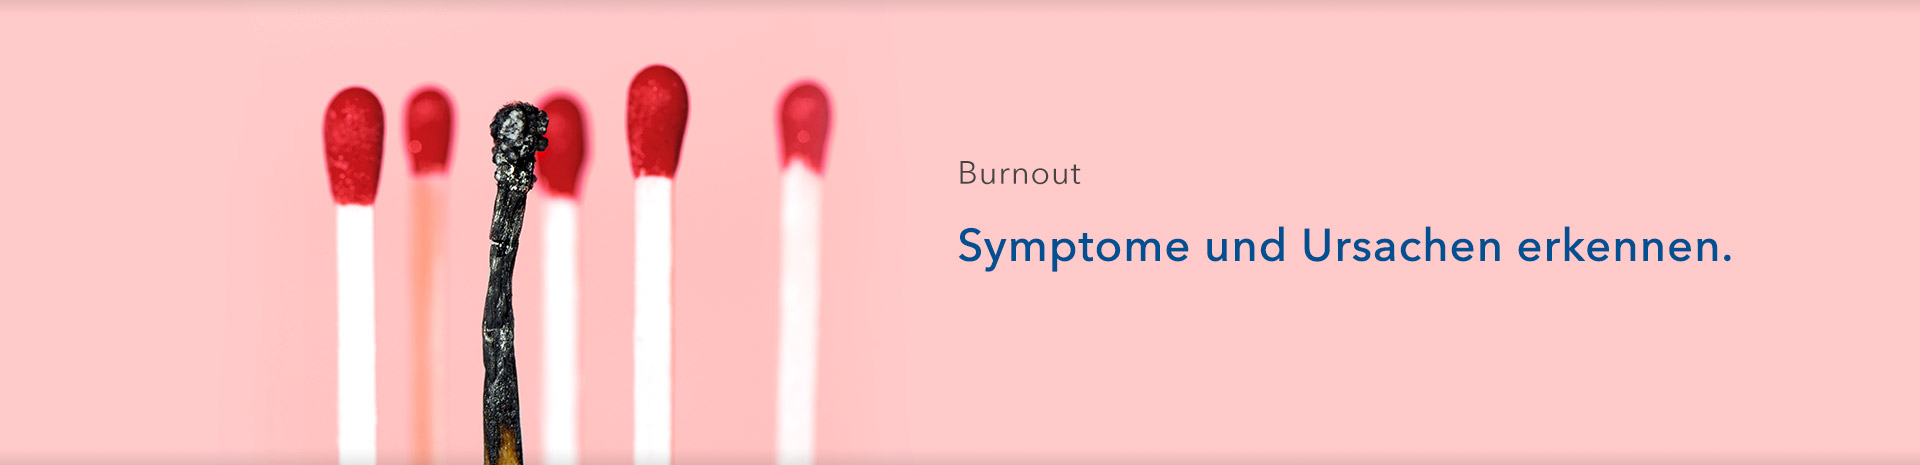 Burnout-Ratgeber Ihrer Online Apotheke